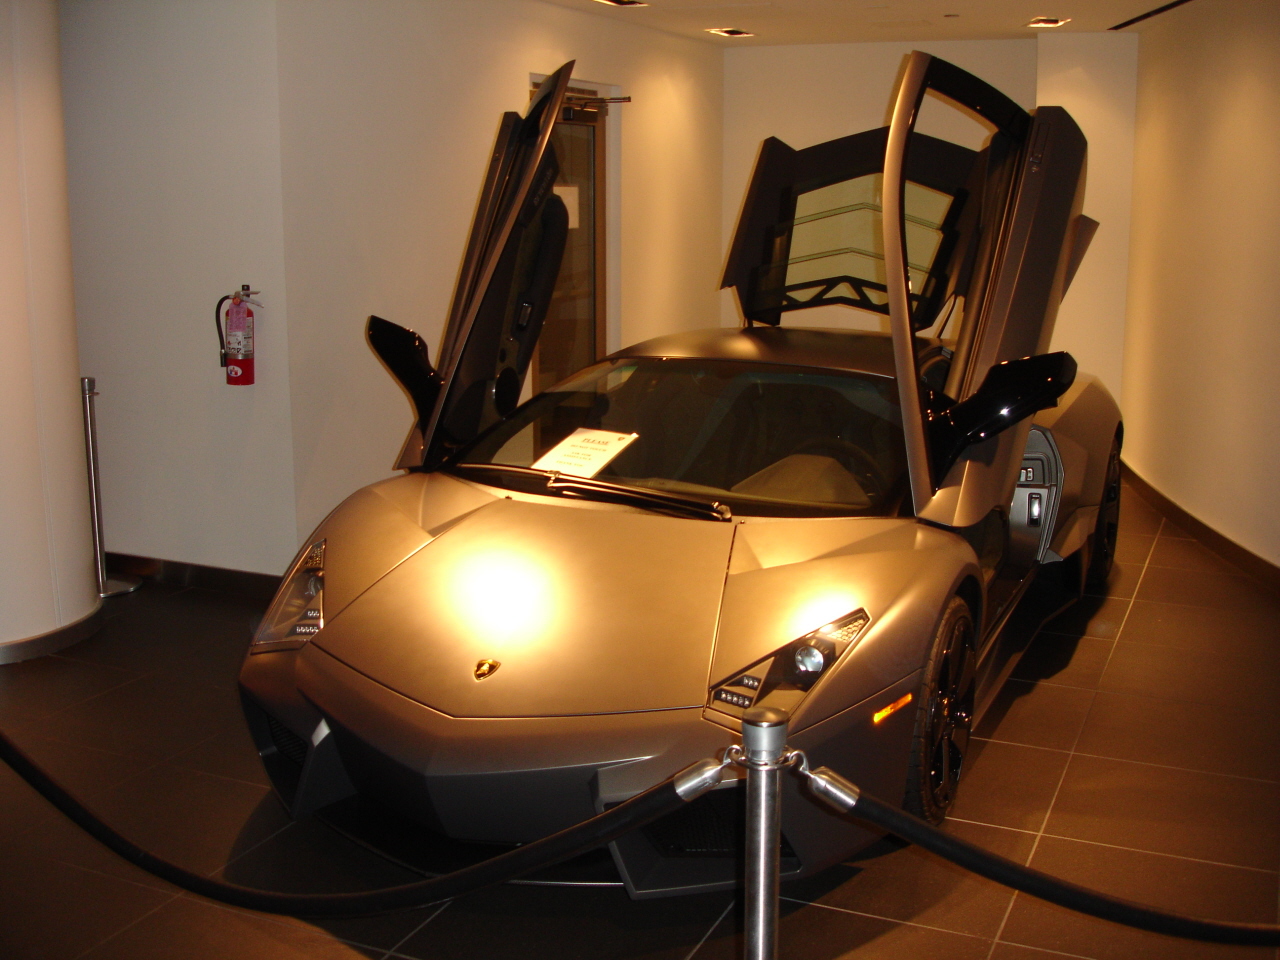 Visita al Museo Lamborghini Las Vegas/ Visit to Lamborghini Museum LasVegas-Lamborghini03.JPG